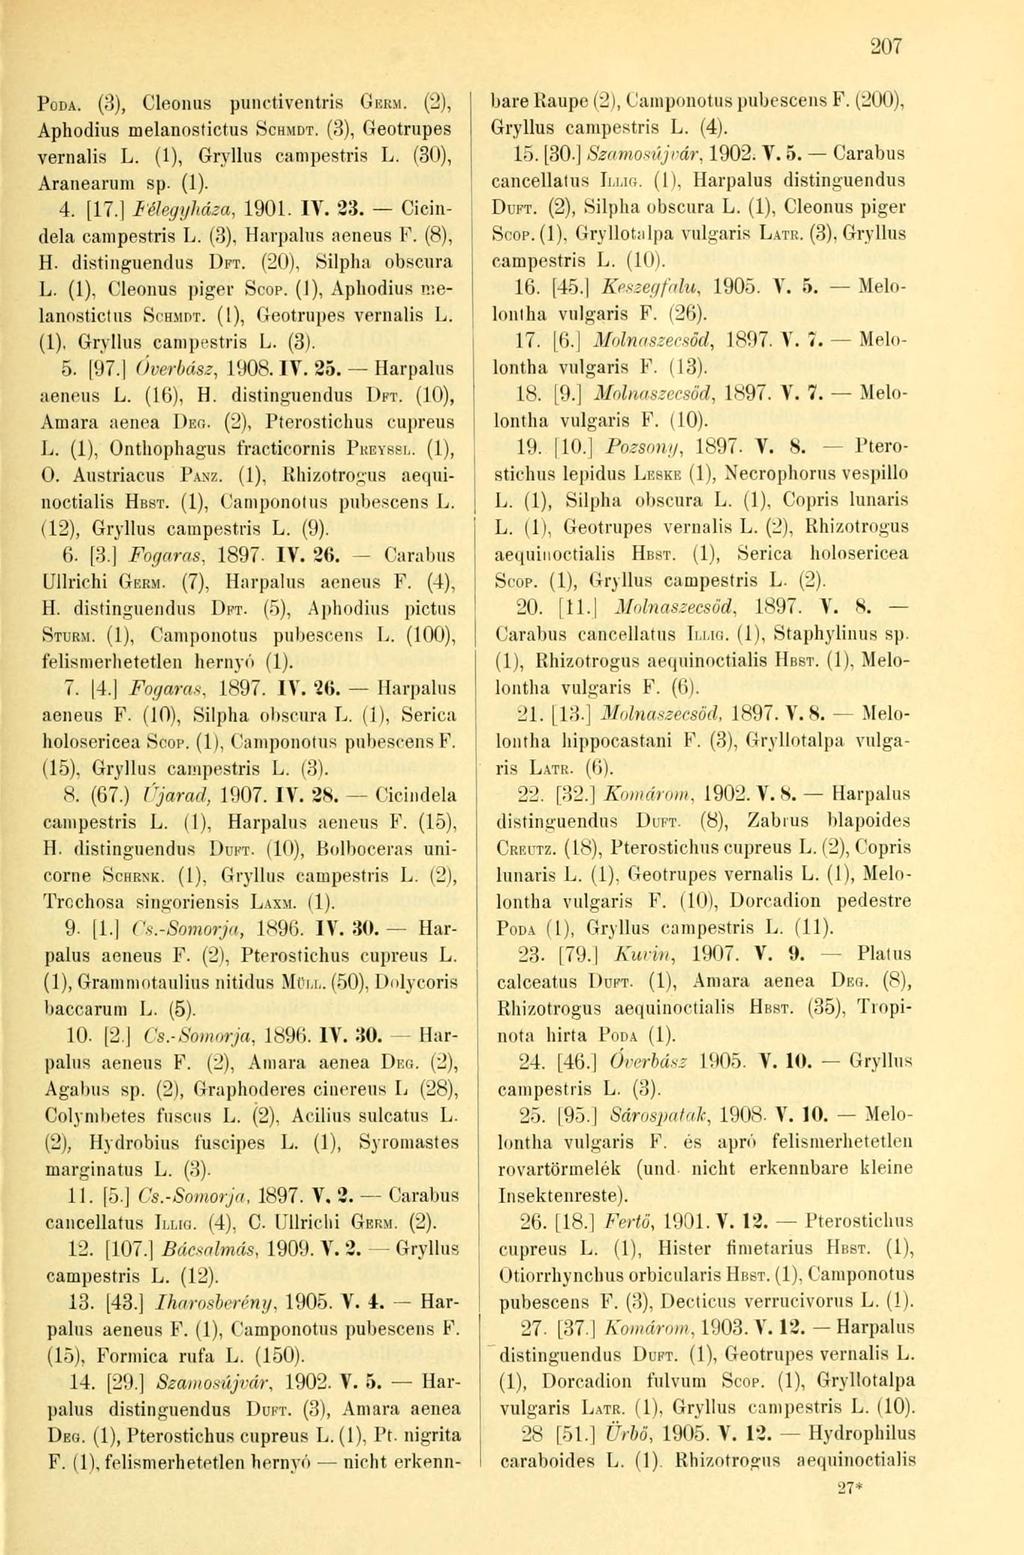 207 PODA. (3), Cleoiius punctiventris GERM. (2), Aphodius melanostictus SCHMDT. (3), Geotrupes vernalis L. (1), Gryllus campestris L. (30), Aranearum sp. (1). 4. [17.1 Félegyháza, 1901. IV. 23.